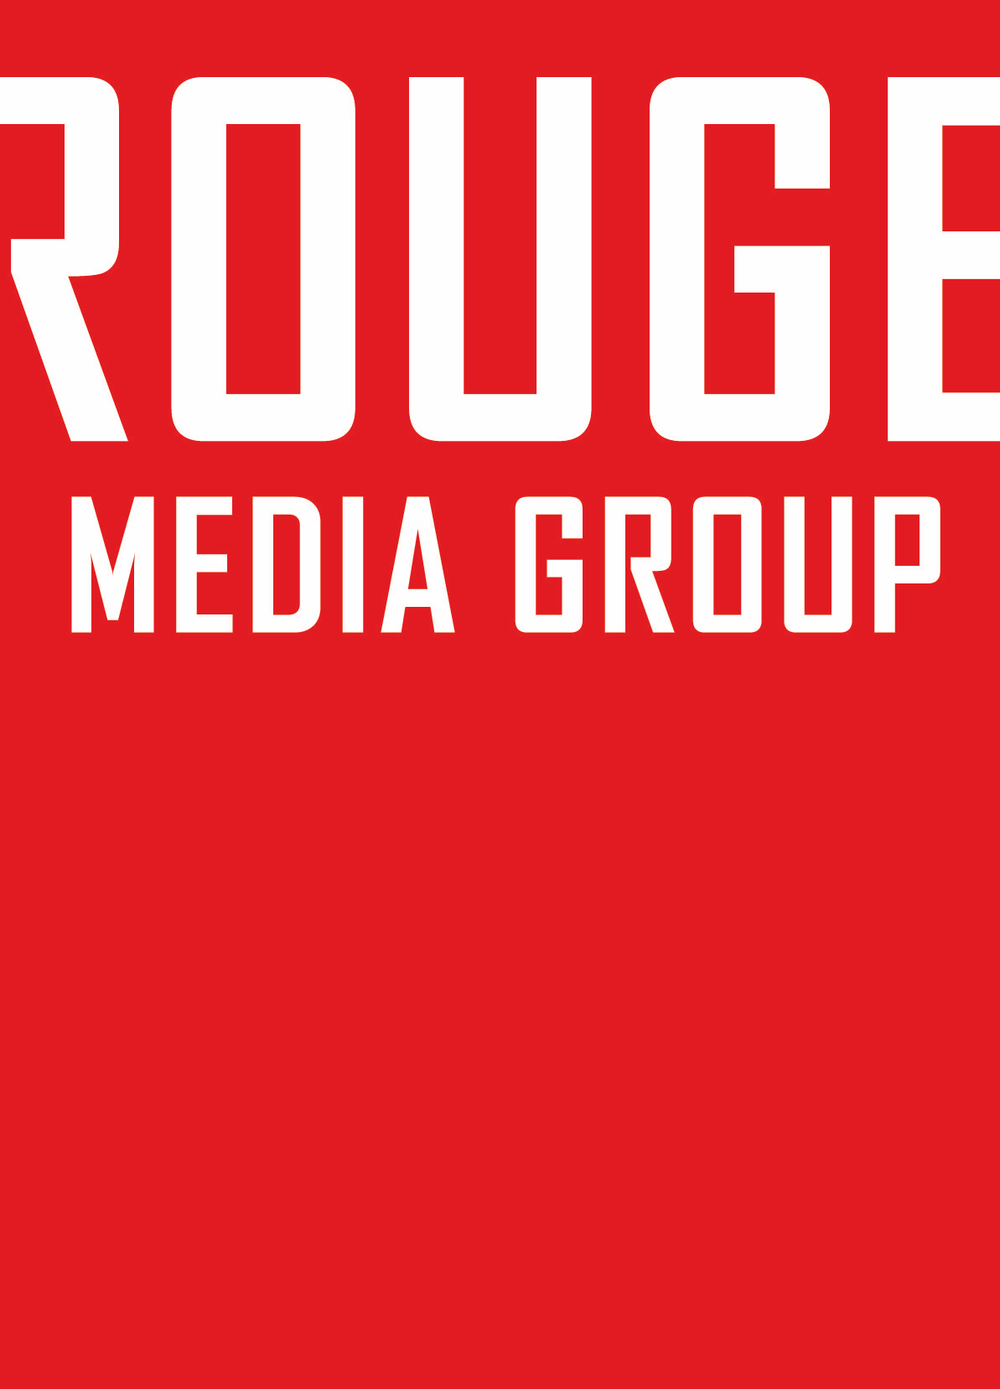 Red Media Logo - ROUGE MEDIA